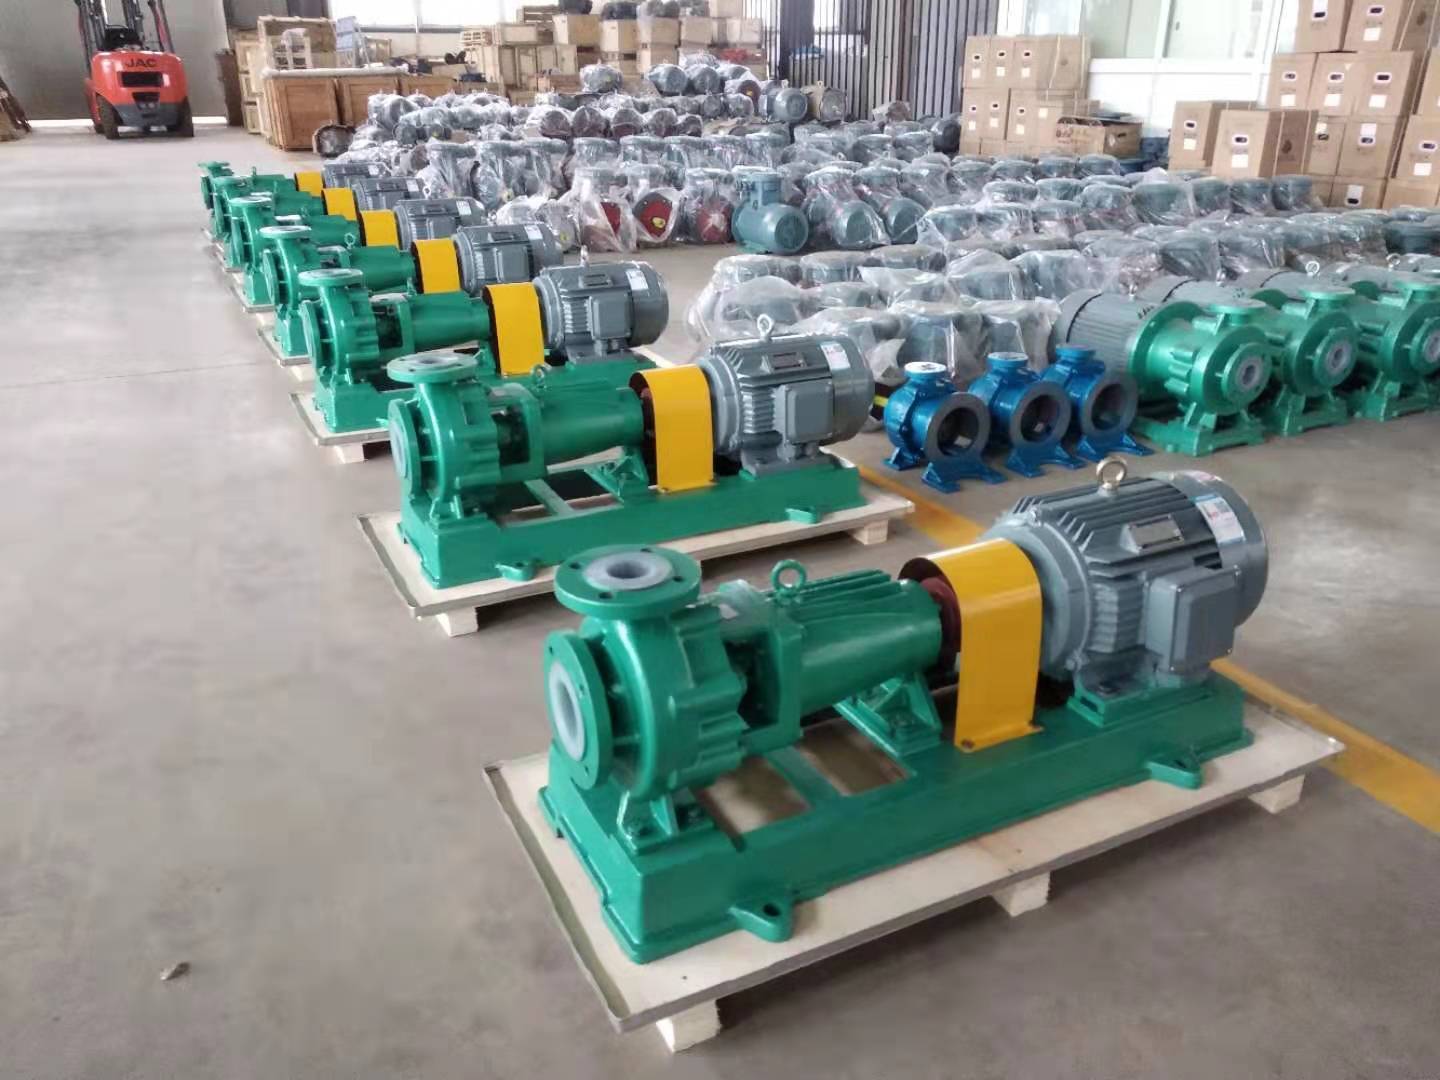 PTFE lined centrifugal pumps